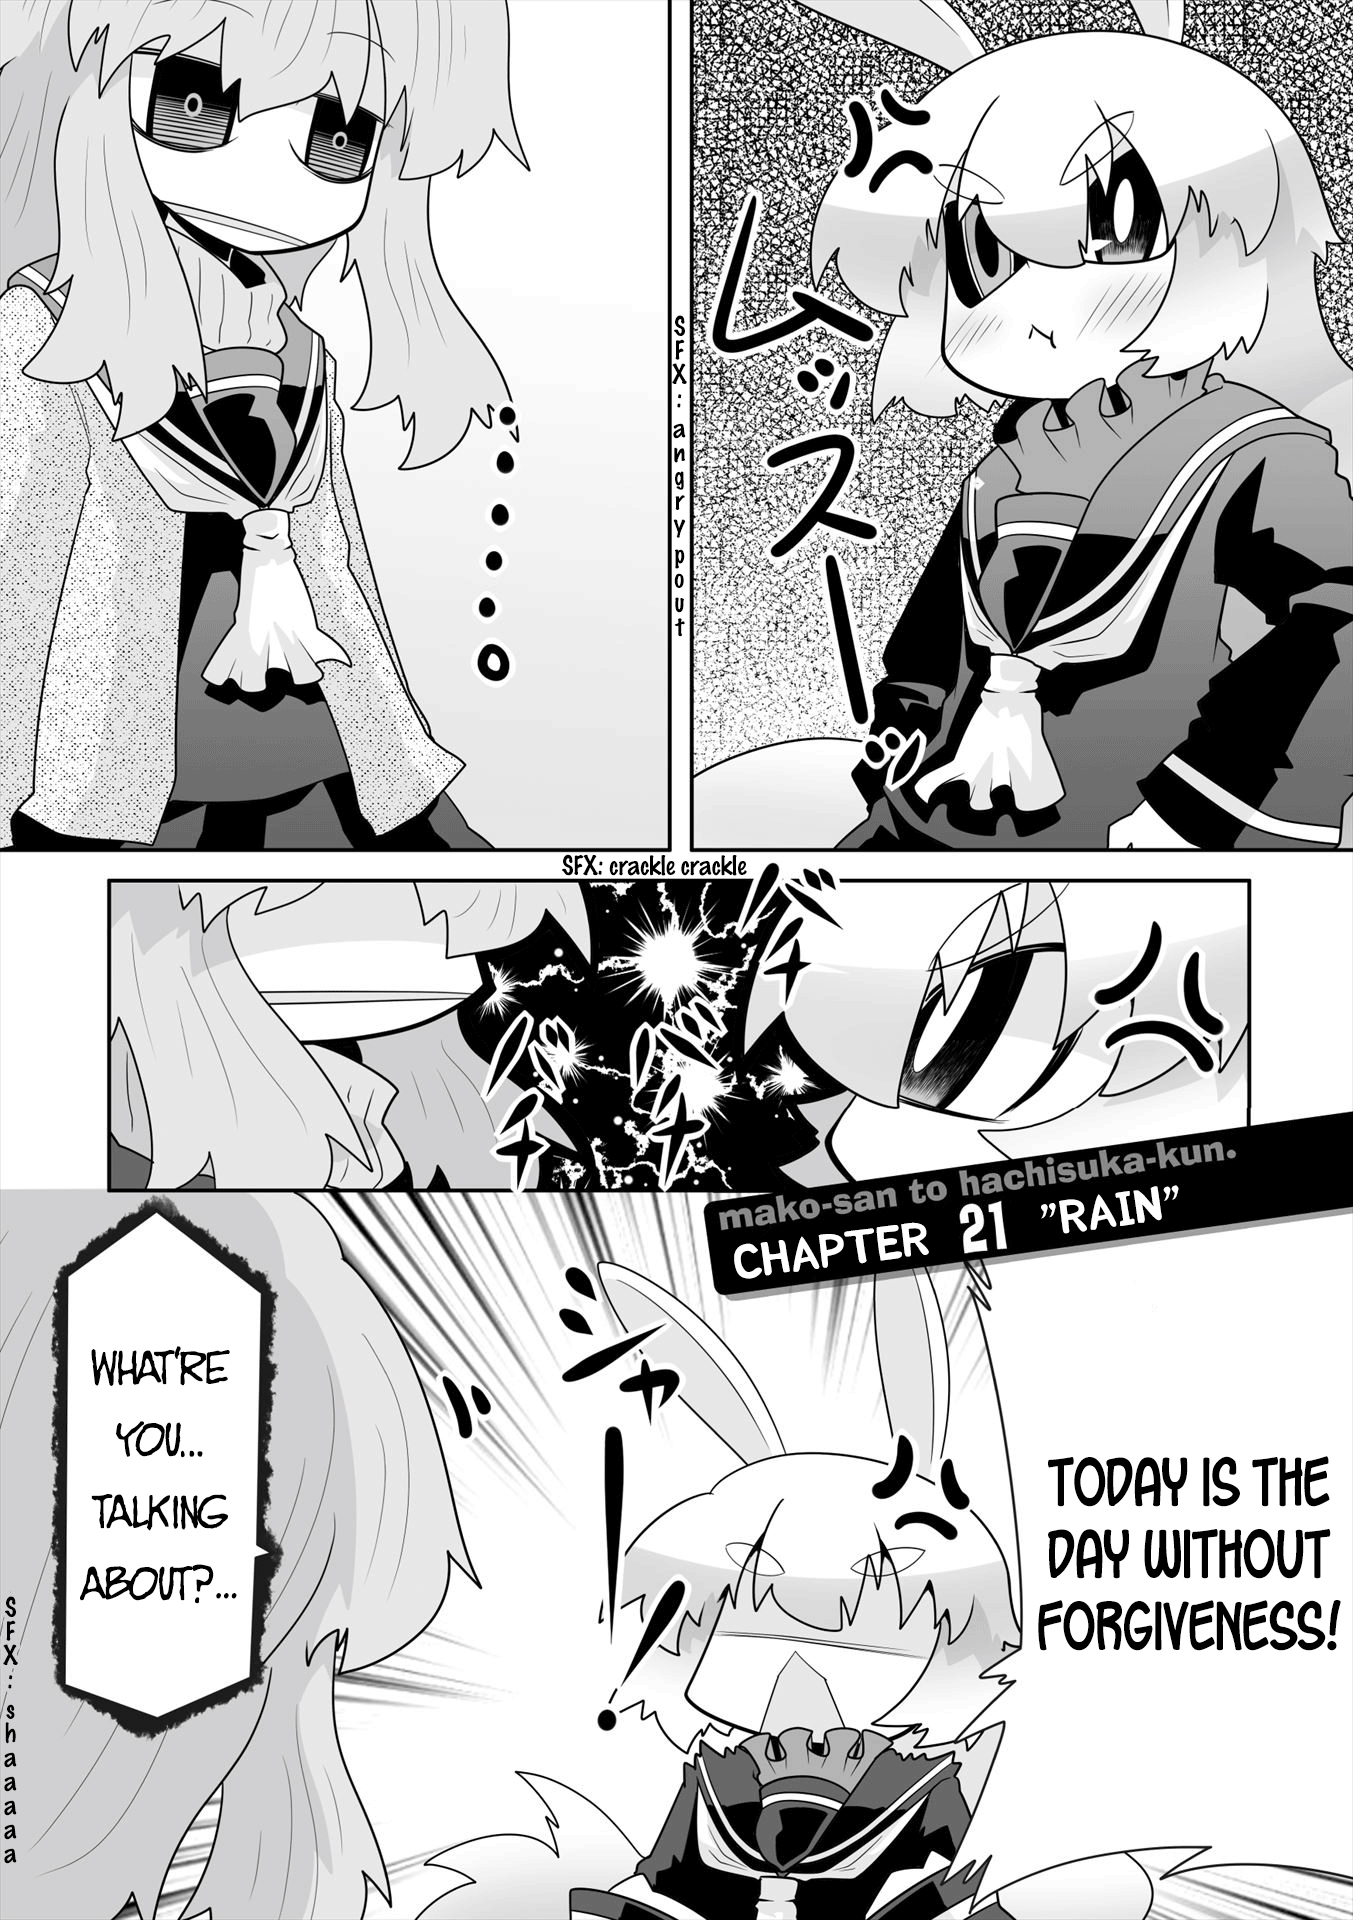 Mako-San To Hachisuka-Kun. Chapter 21 #1